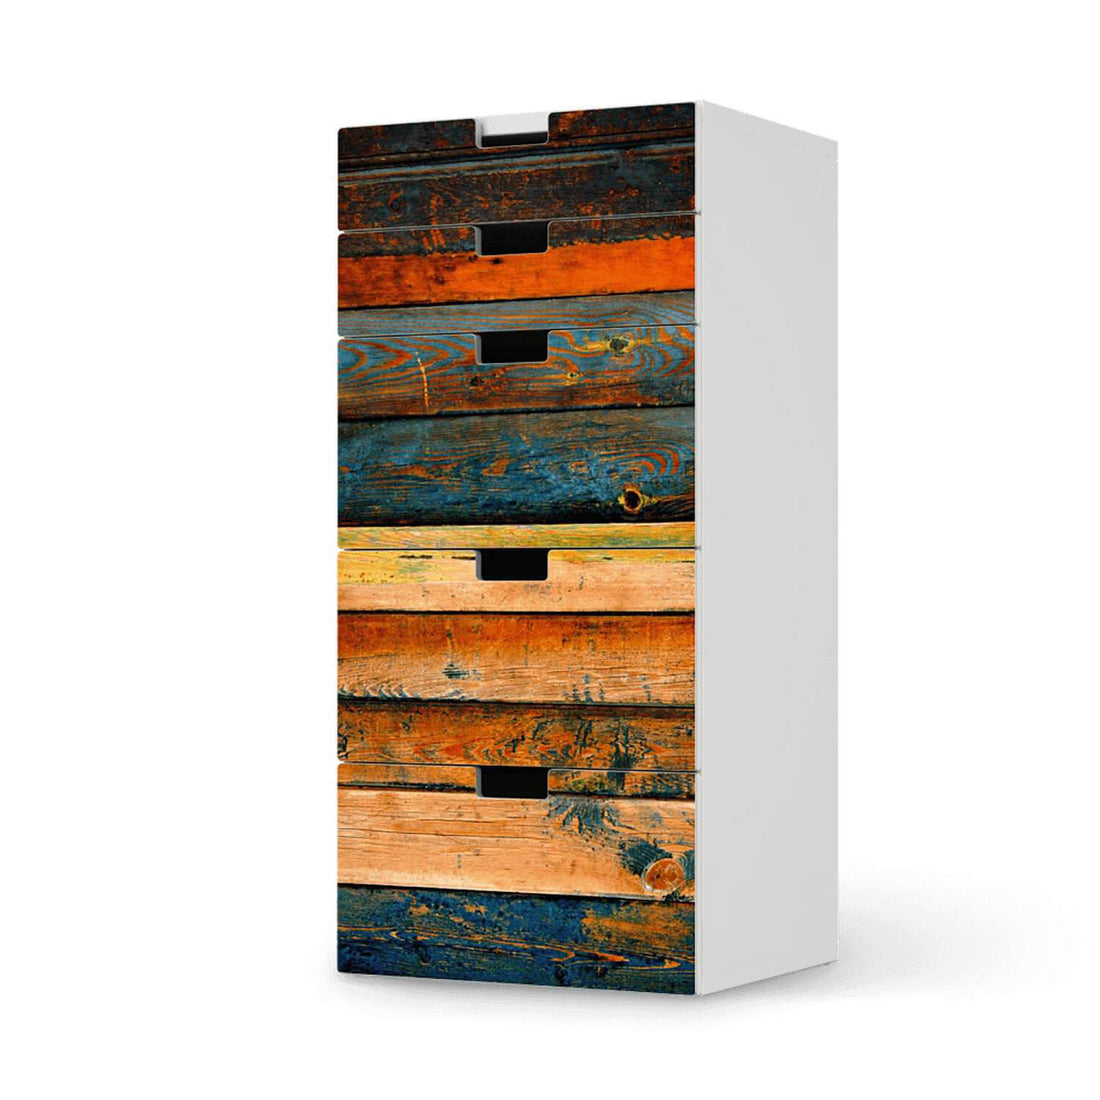 Möbel Klebefolie Wooden - IKEA Stuva Kommode - 5 Schubladen  - weiss